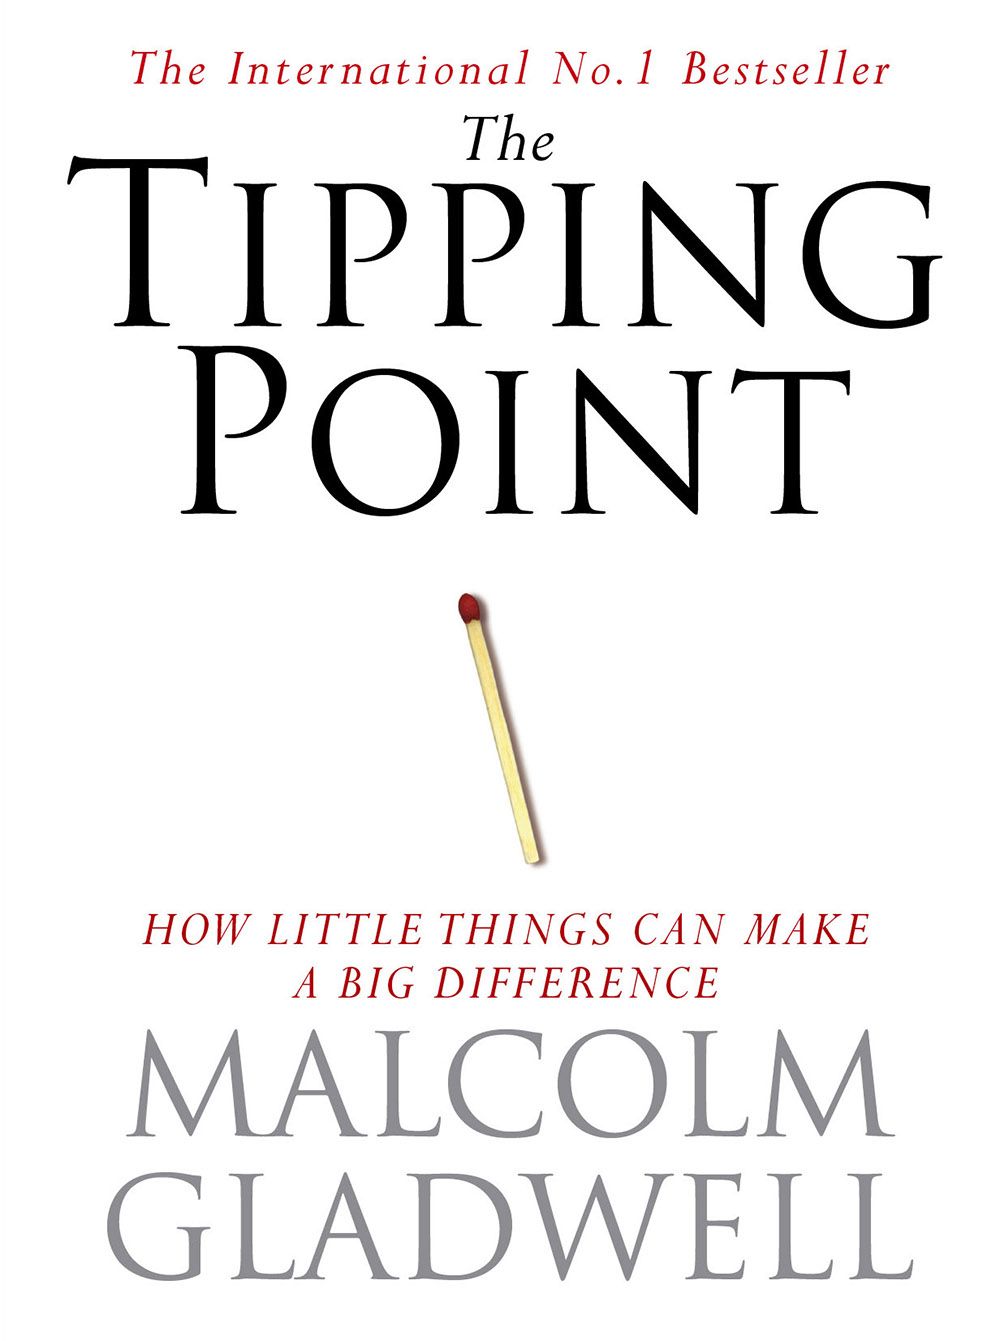 tipping-point-ca44b343be4b54eefc18aadd24a47d24.jpg